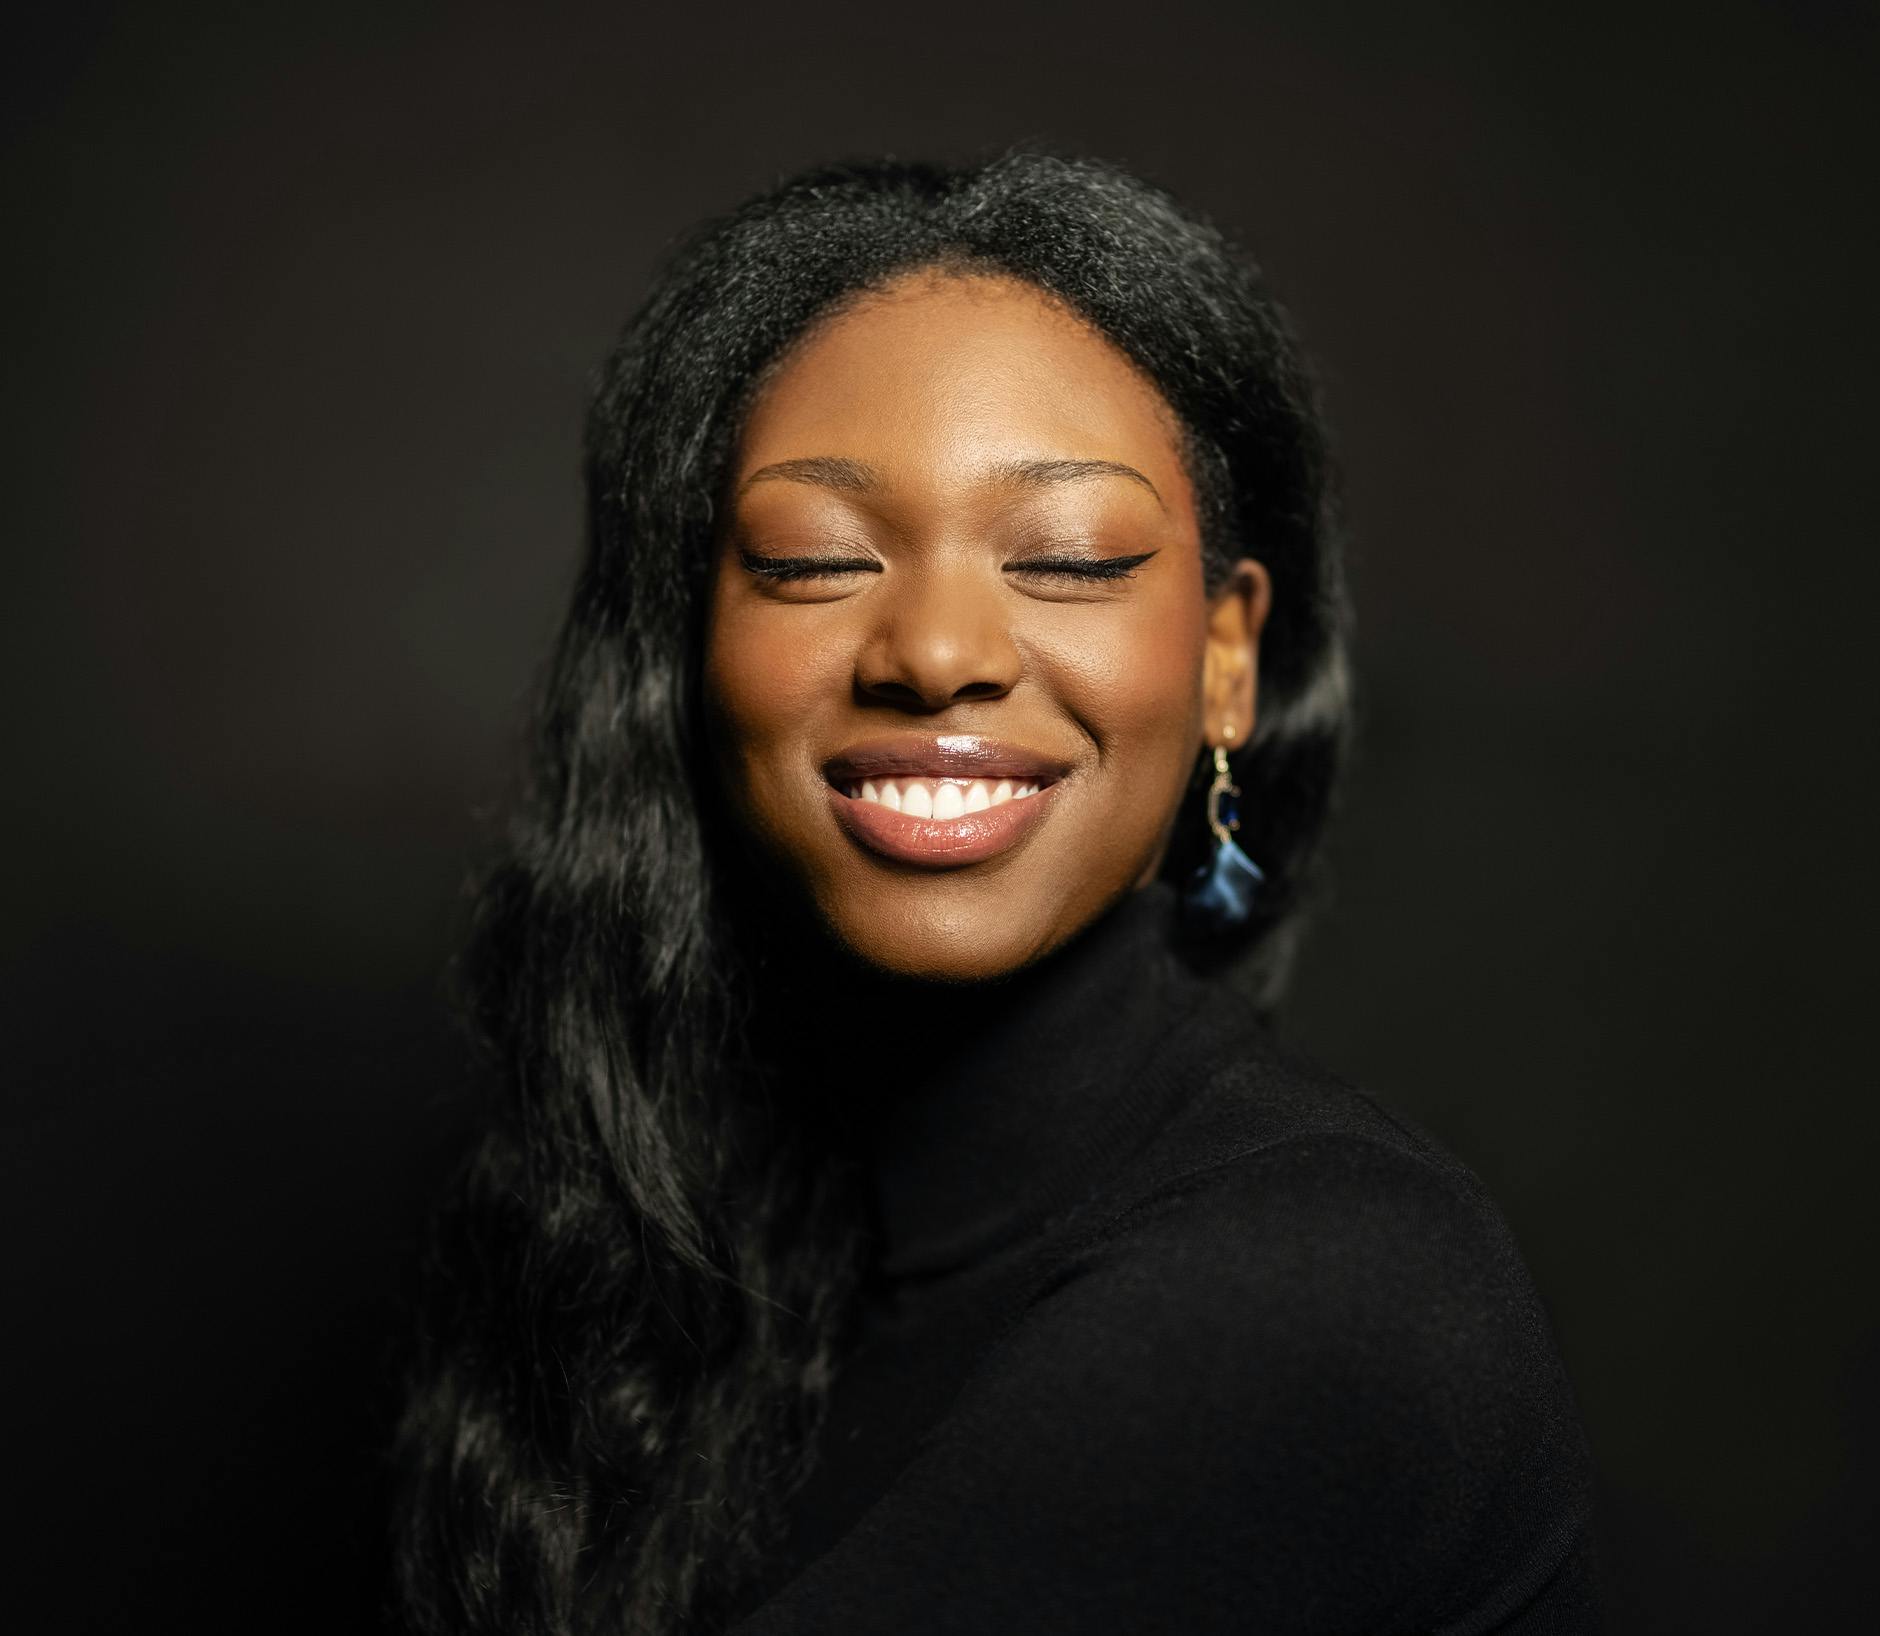 Woman wearing a black turtleneck smiling